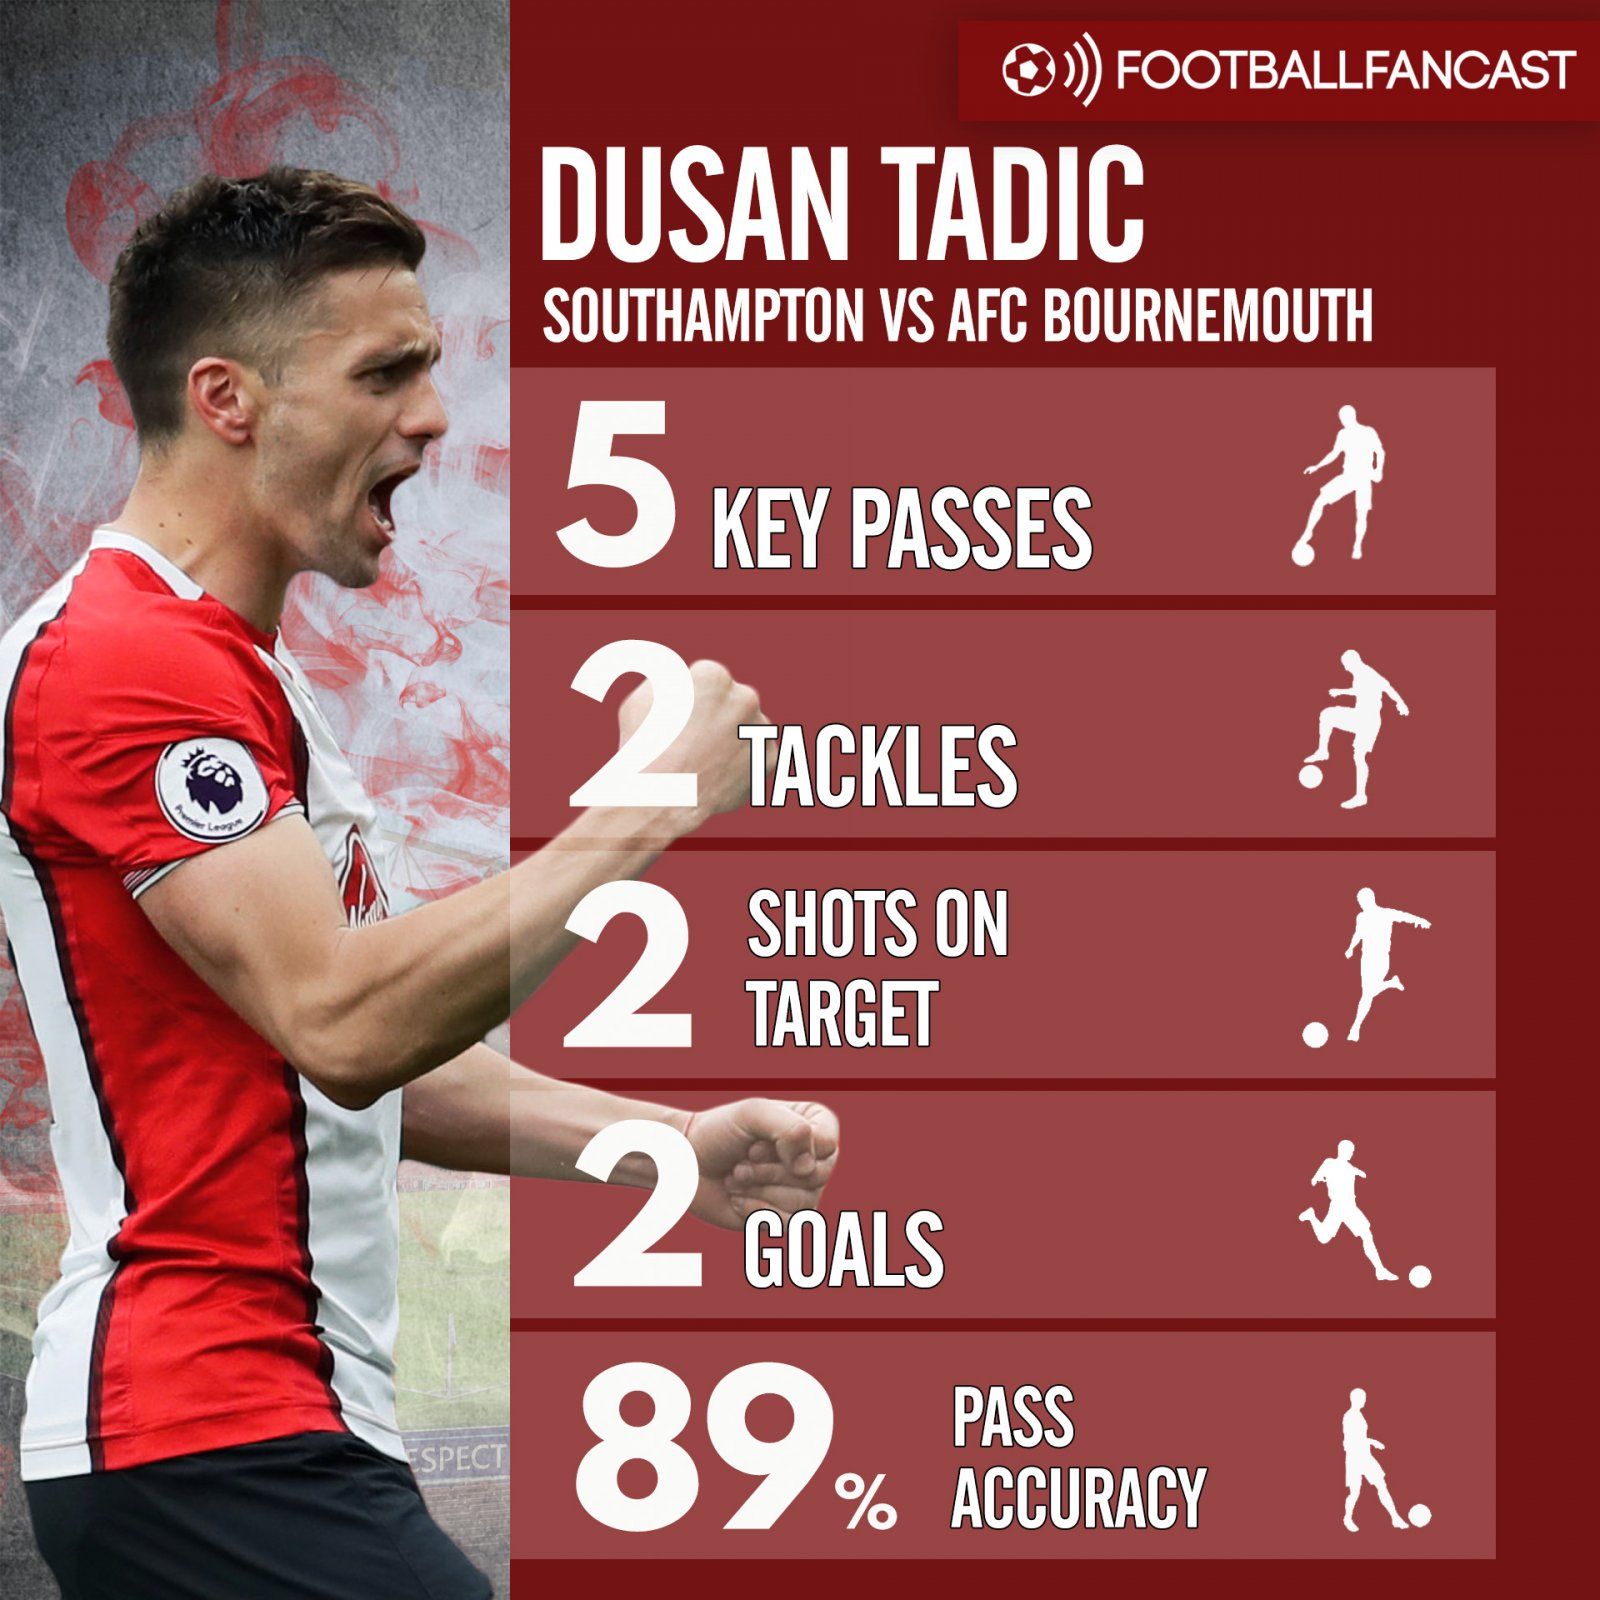 Dusan Tadic statistics vs Bournemouth